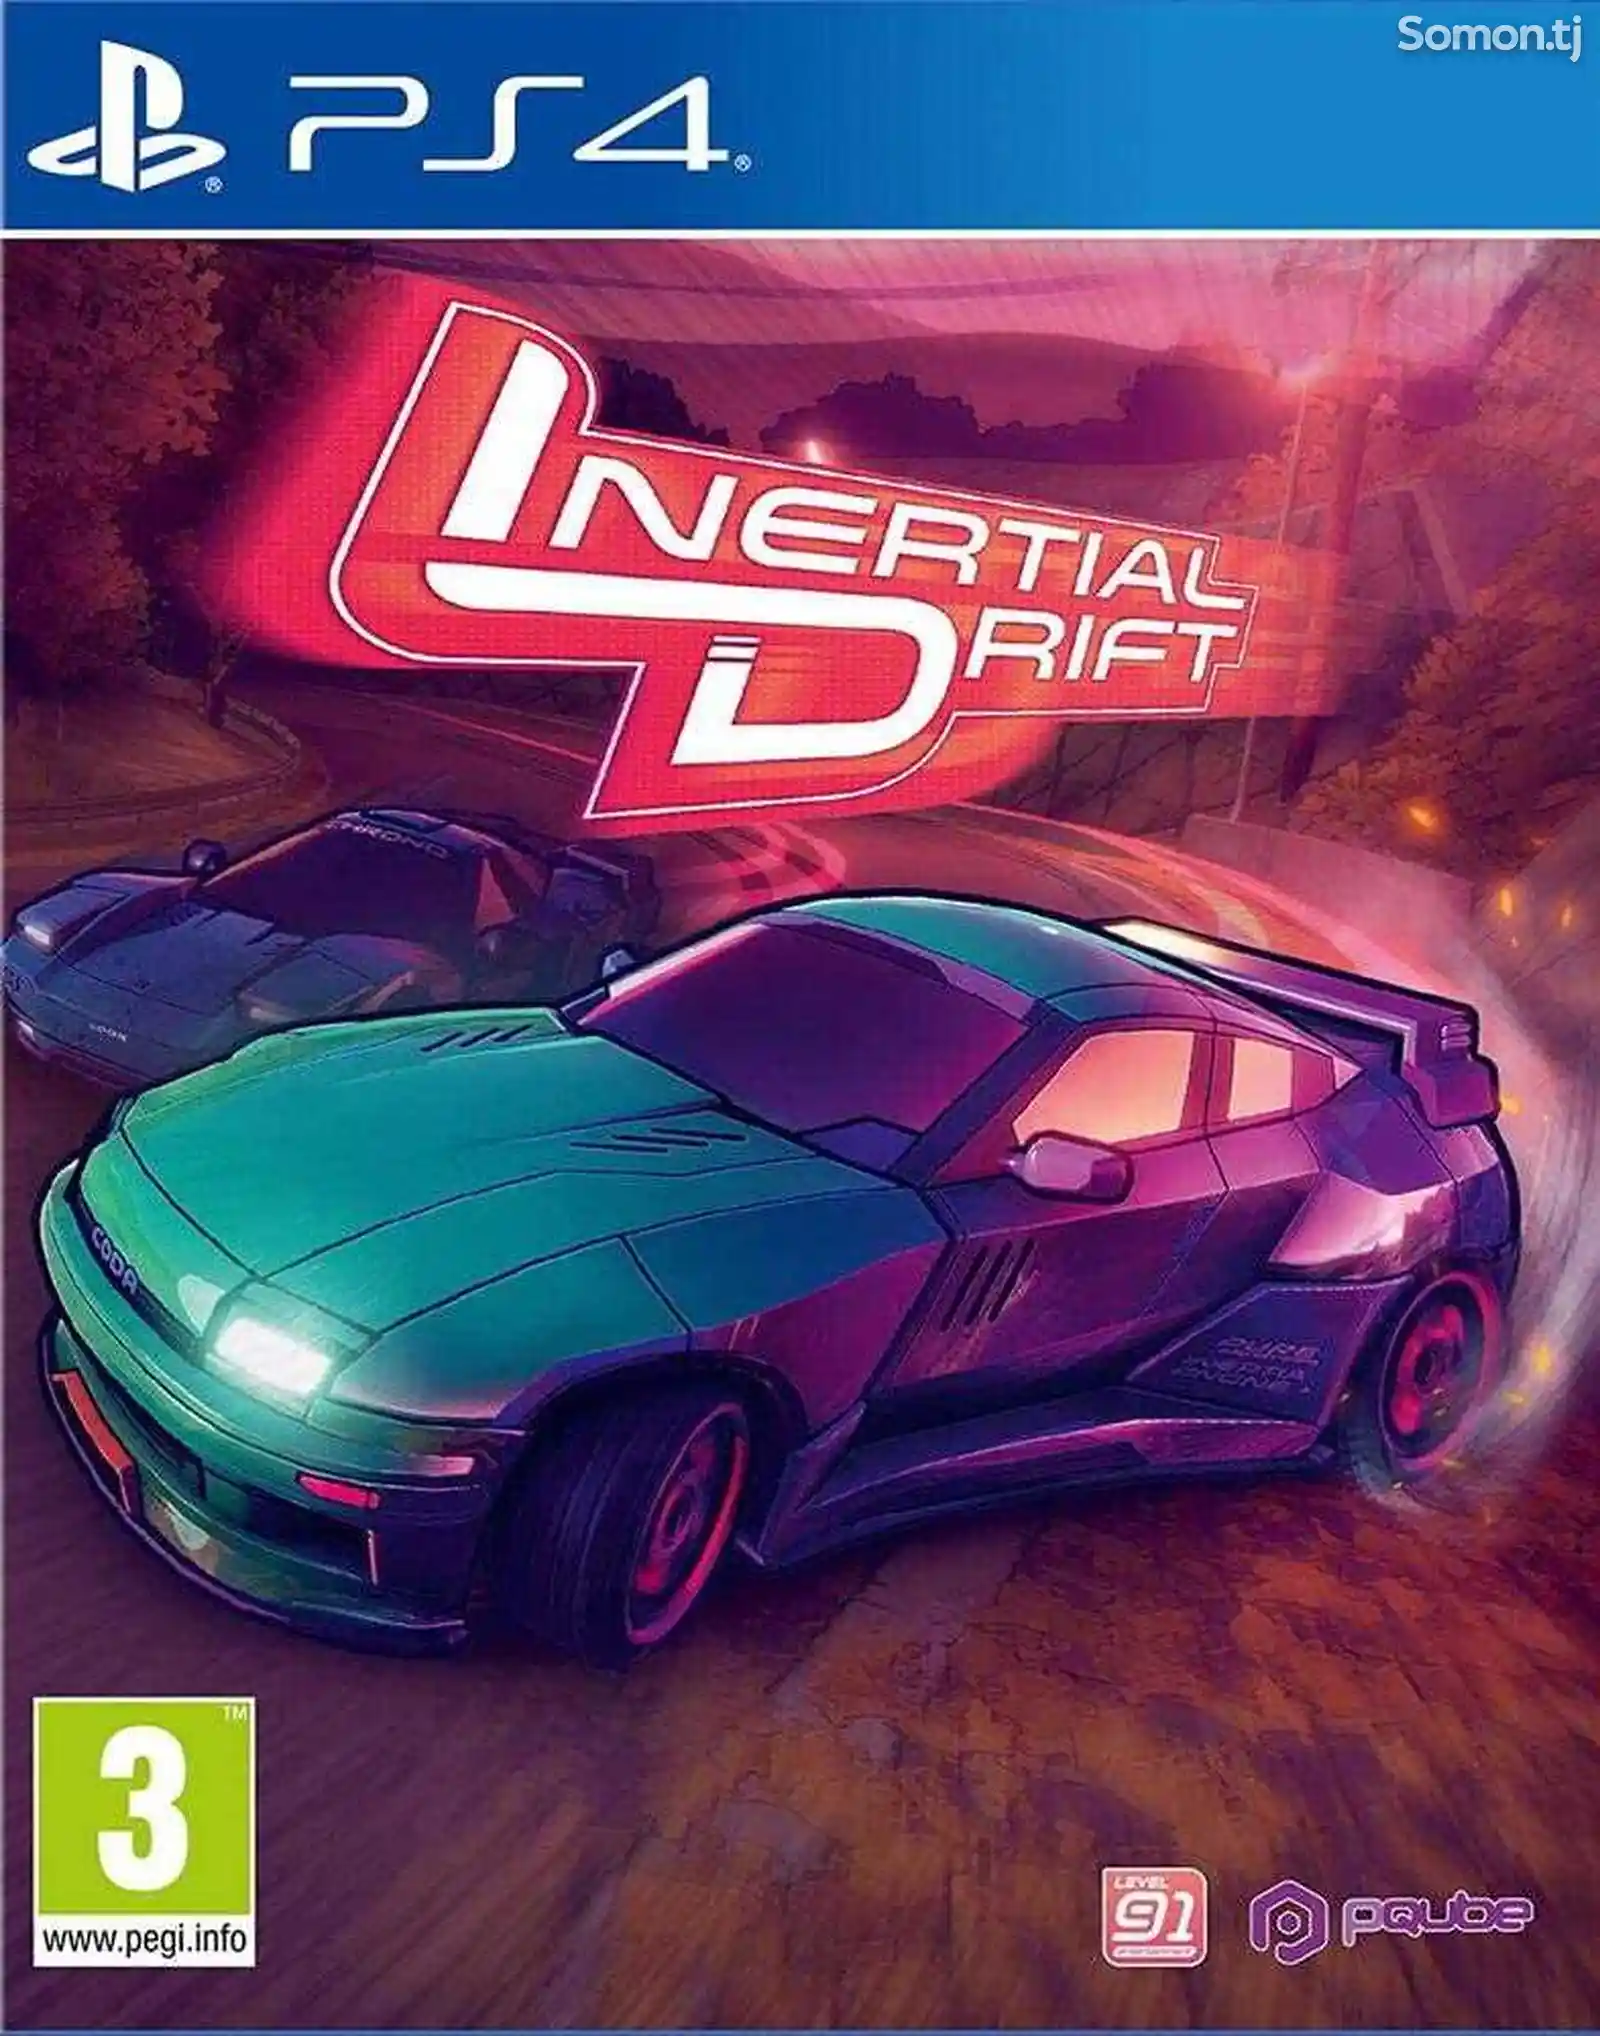 Игра Intertial drift для PS-4 / 5.05 / 6.72 / 7.02 / 7.55 / 9.00 /